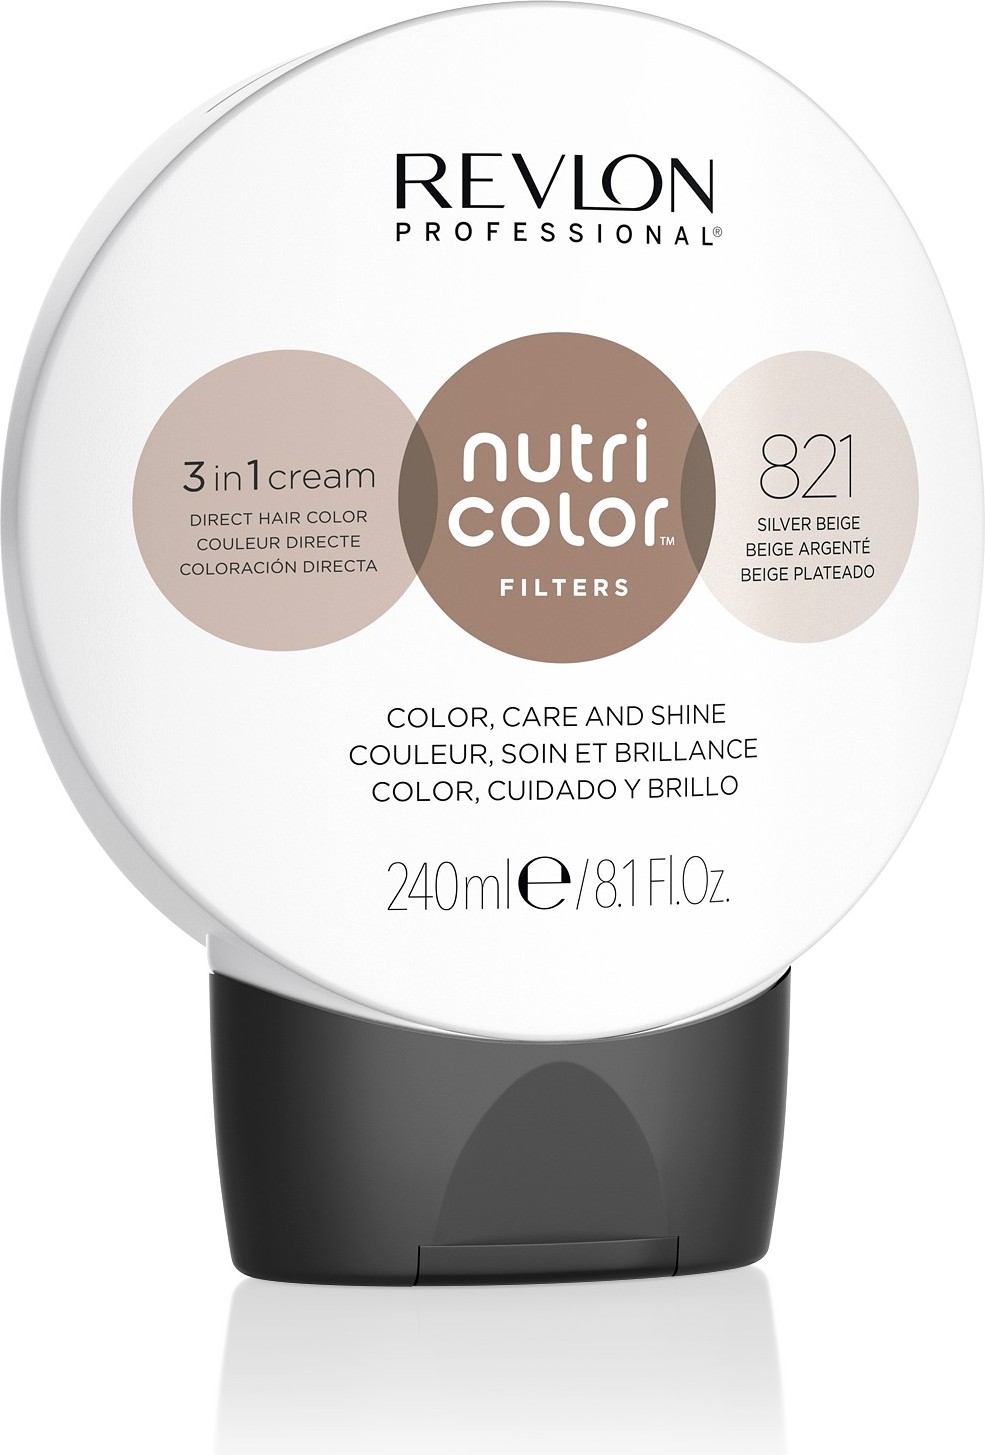  Revlon Professional Nutri Color Filters 821 Beige Argent 240 ml 